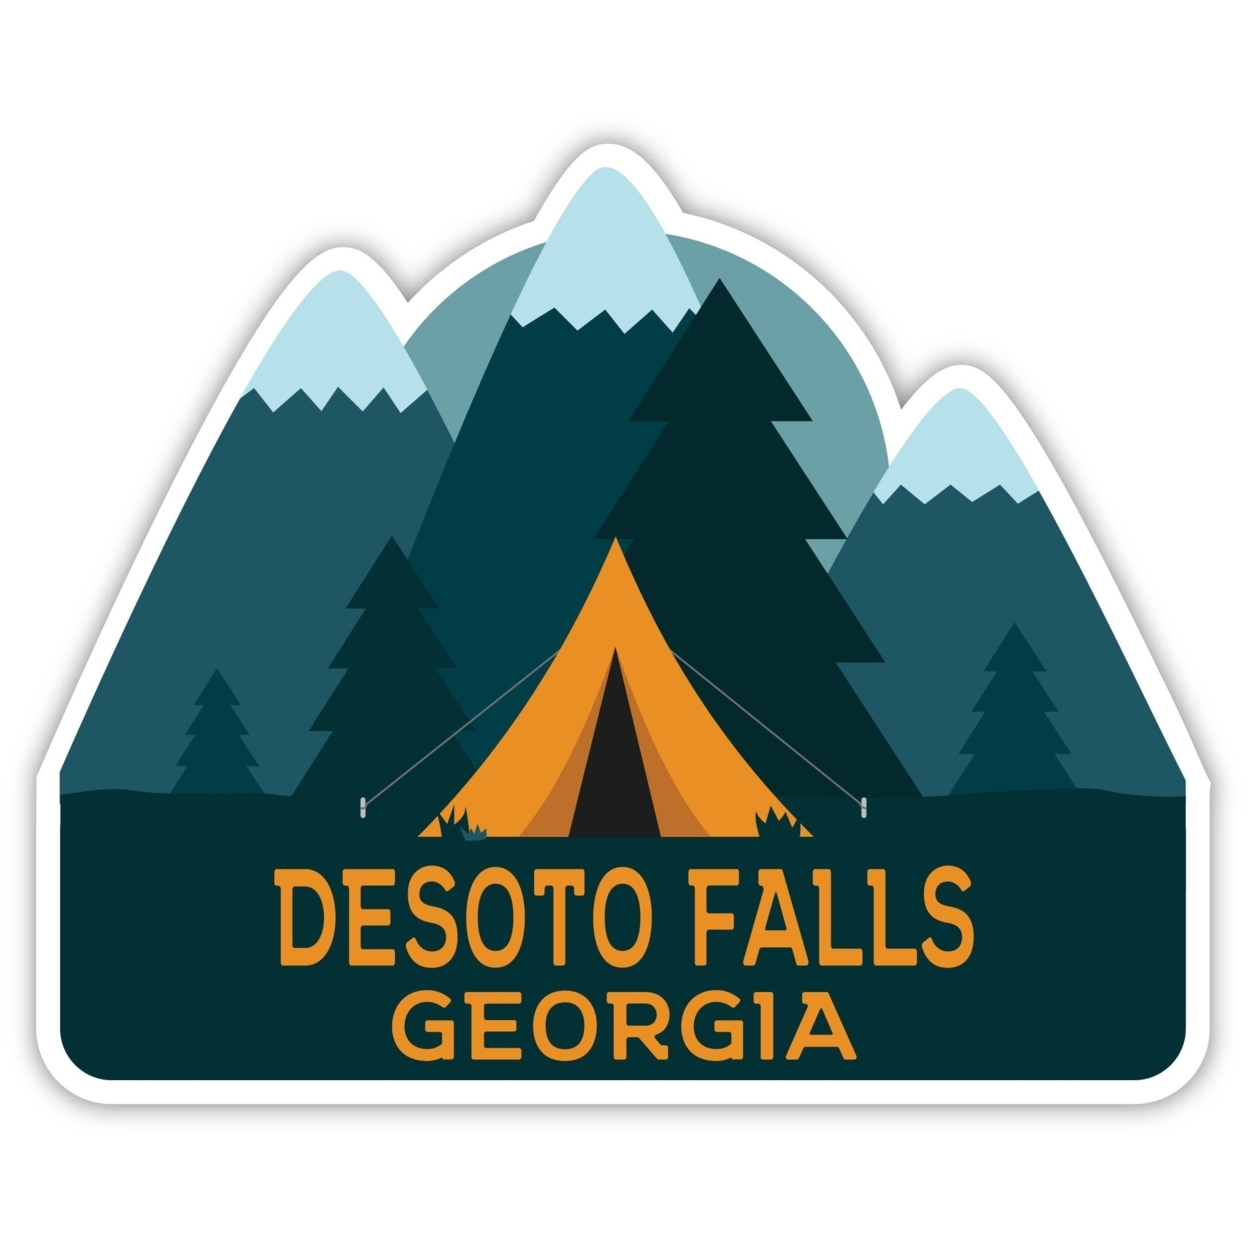 DeSoto Falls Georgia Souvenir Decorative Stickers (Choose Theme And Size) - Single Unit, 2-Inch, Tent